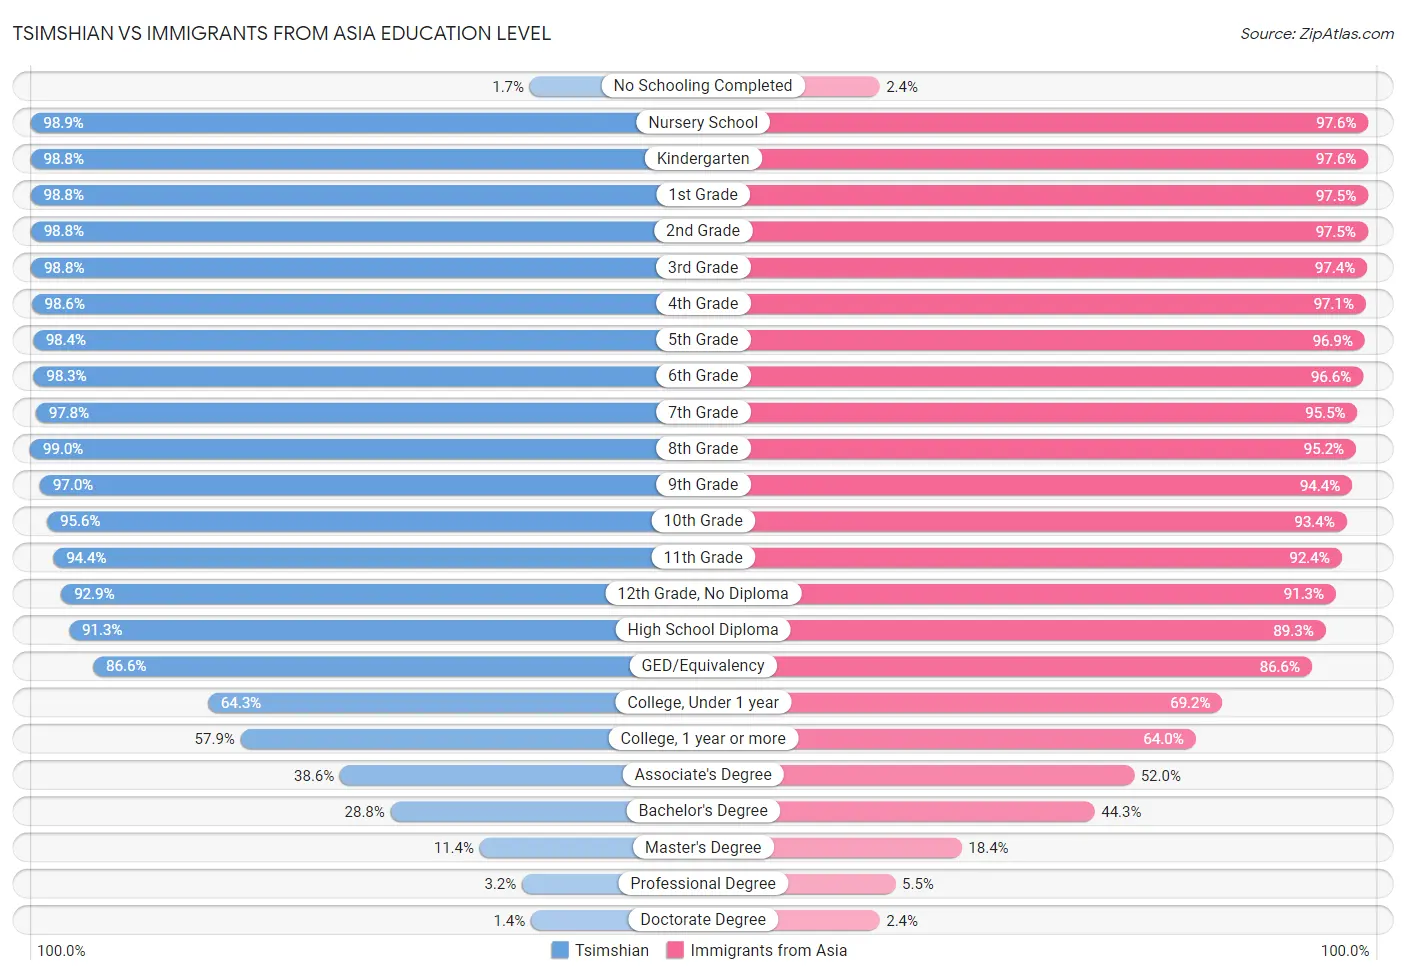 Tsimshian vs Immigrants from Asia Education Level